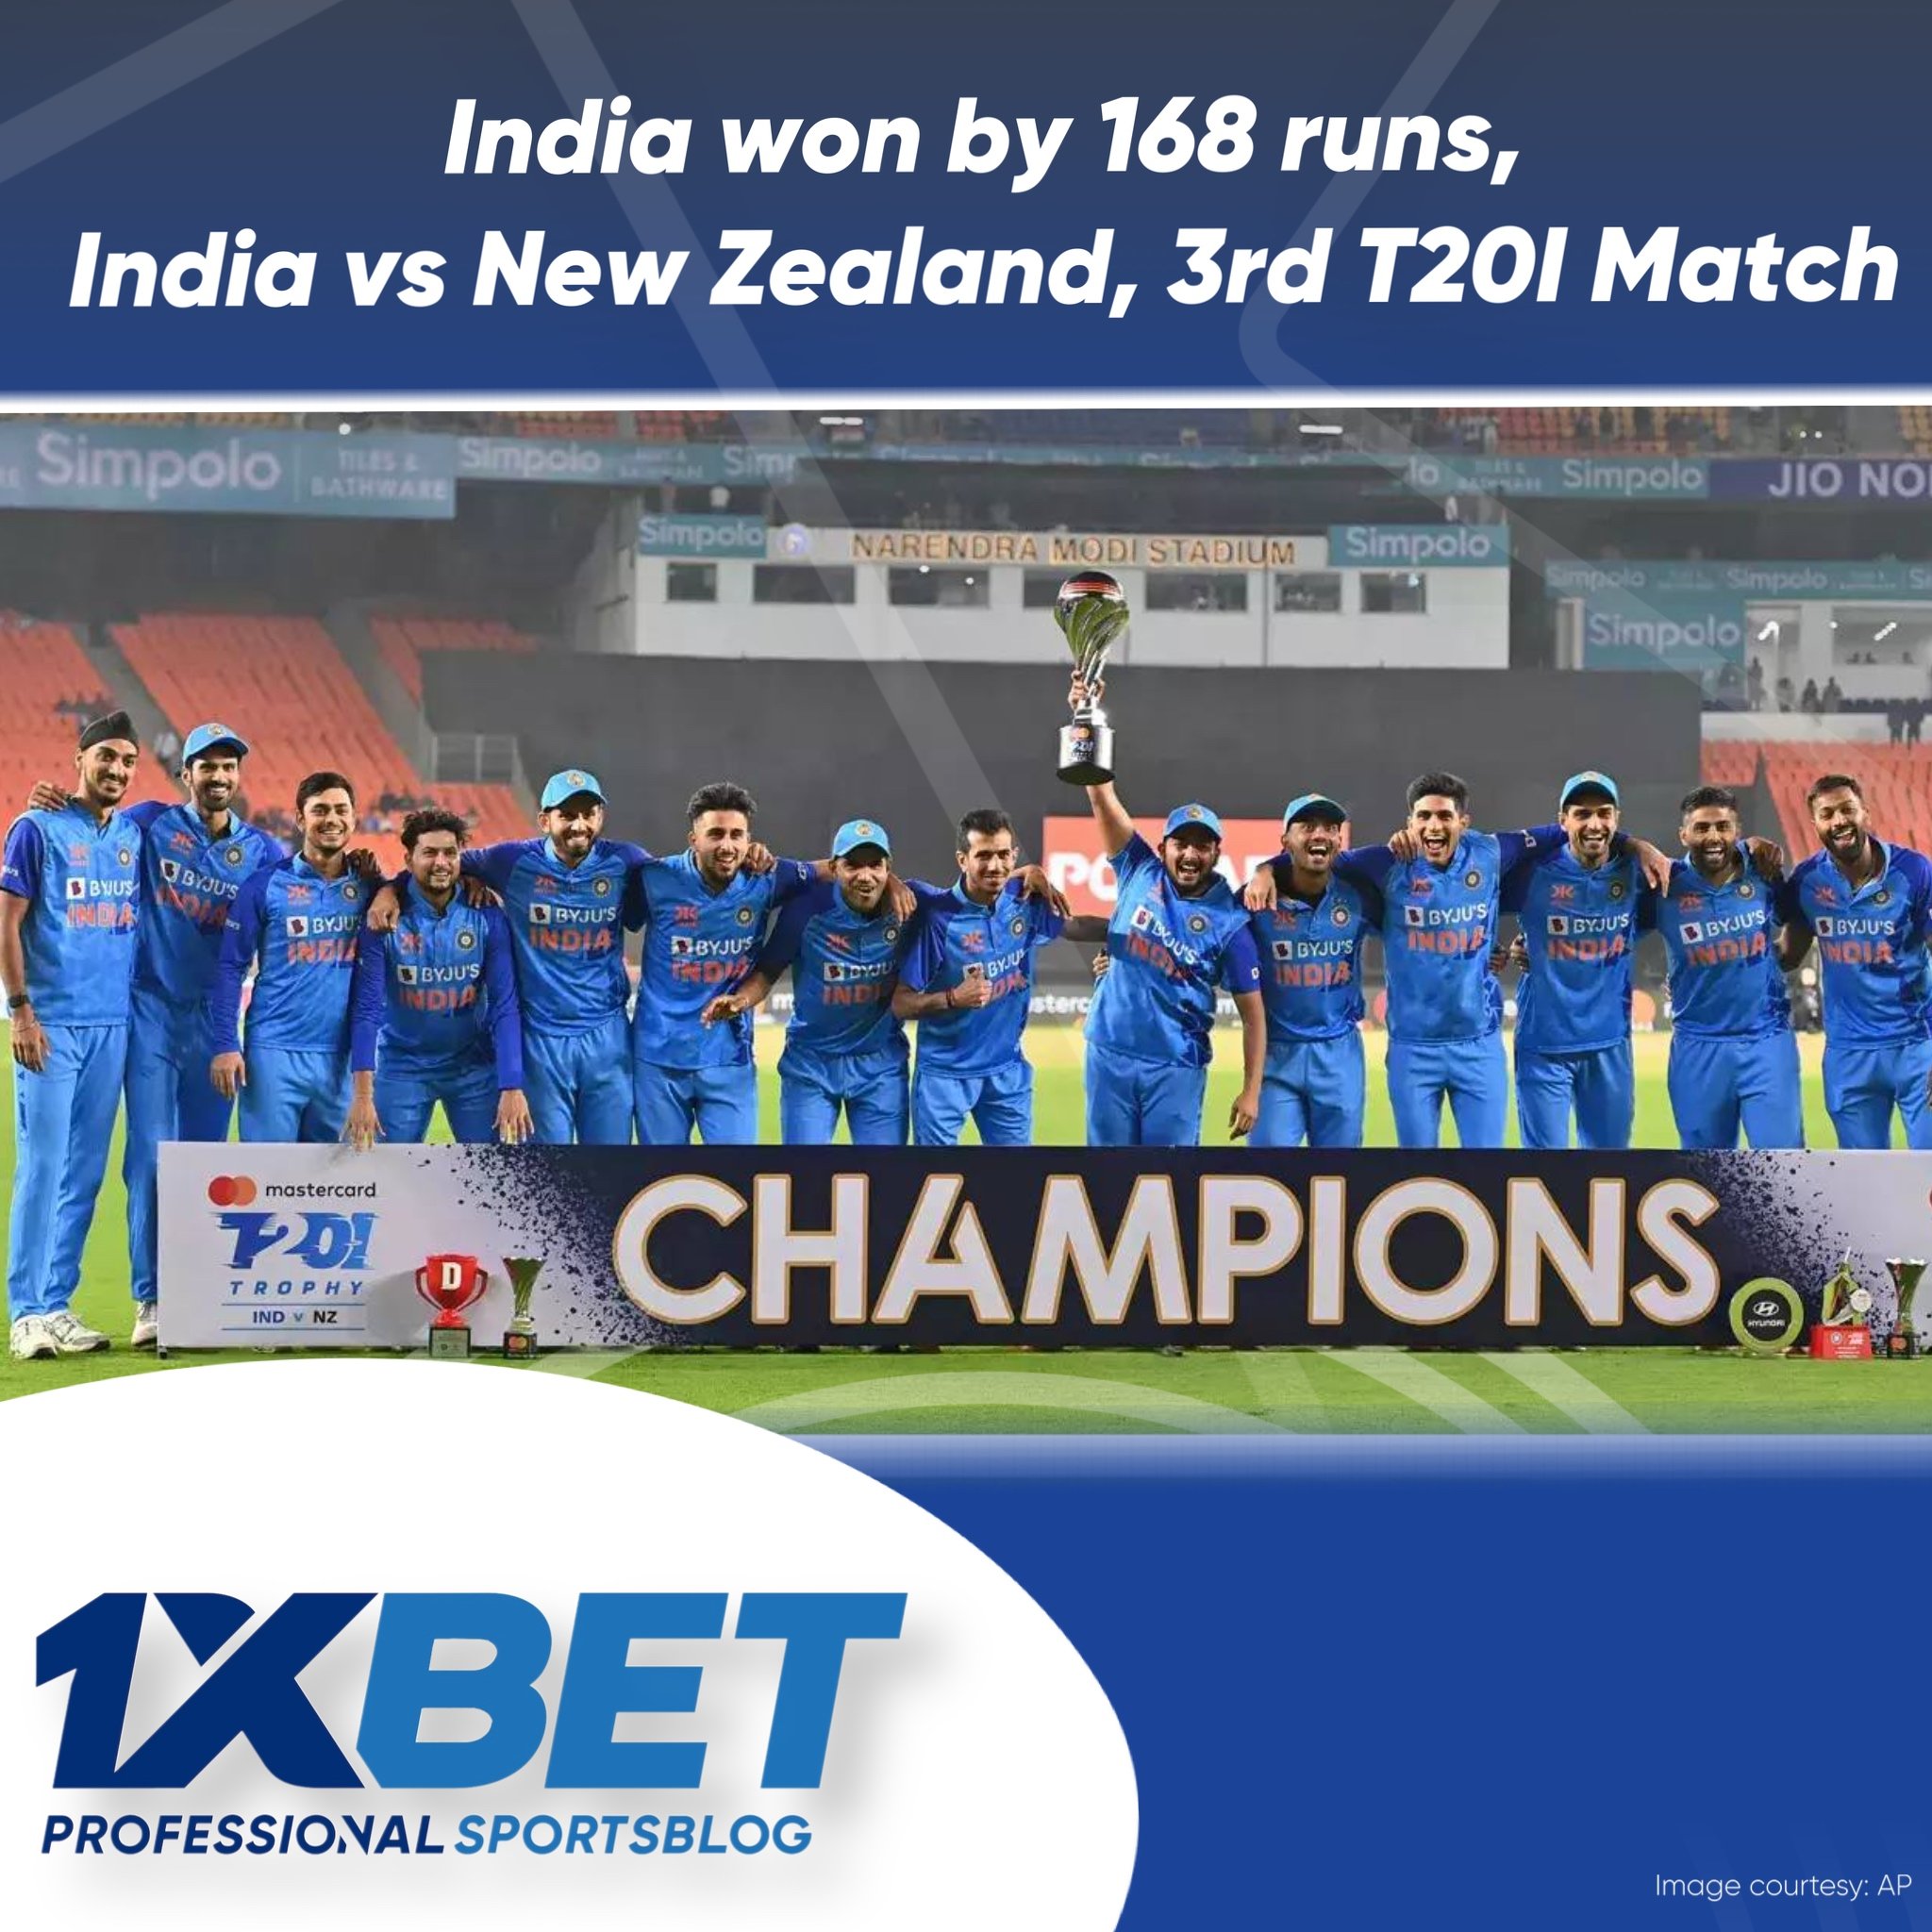 India won by 168 runs